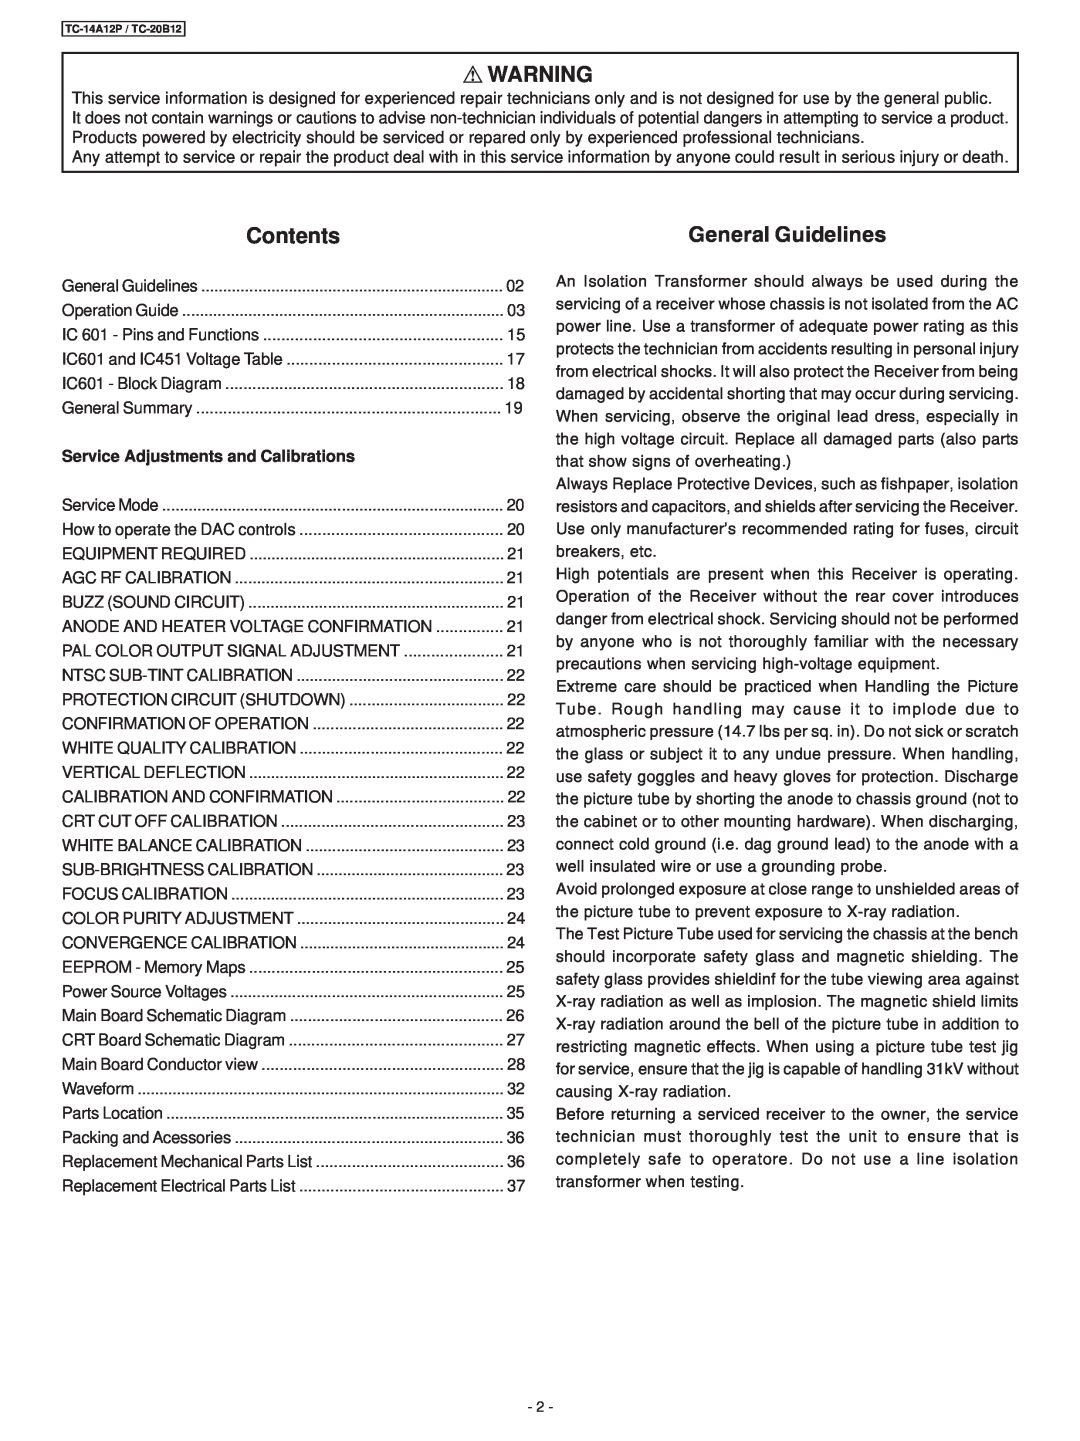 Panasonic TC-20B12, TC-14A12P service manual Contents, General Guidelines 